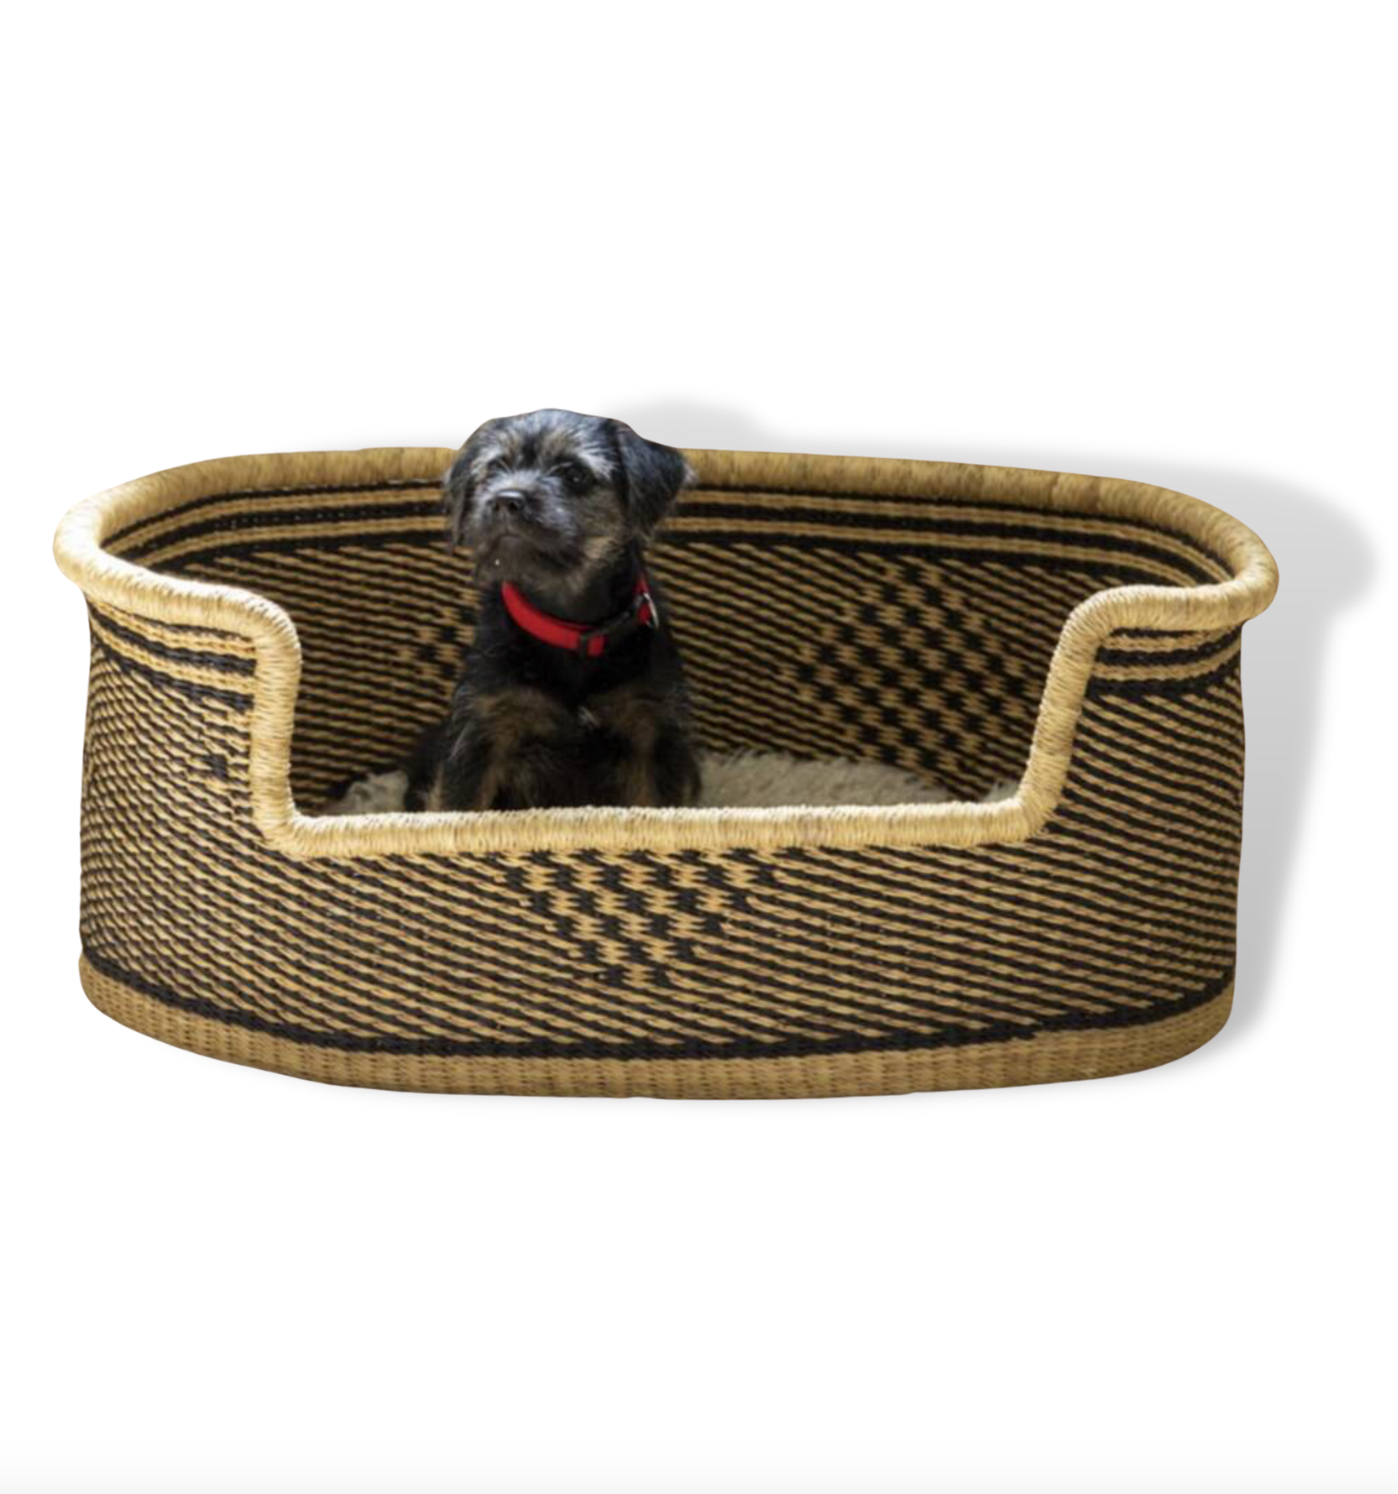 grand-illusions-fidos-hand-made-dog-basket